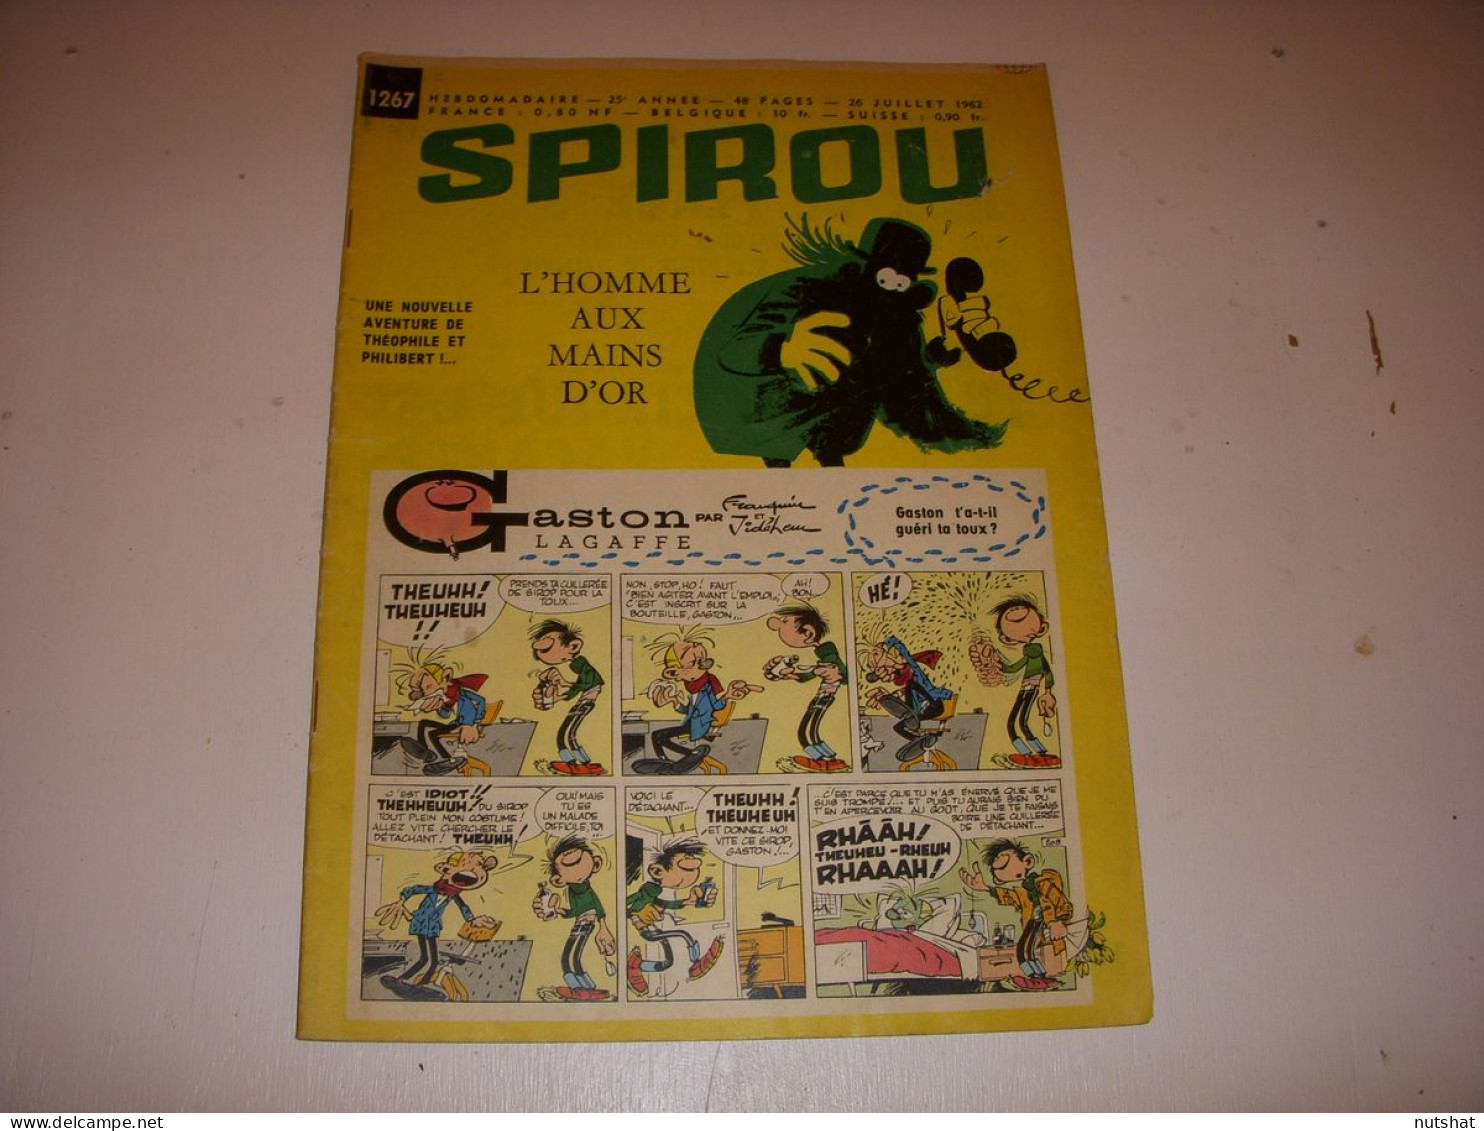 SPIROU 1267 26.07.1962 Les LEZARDS AUTO Les FERRARI CIRQUE Claire FERVAL TWIST   - Spirou Magazine